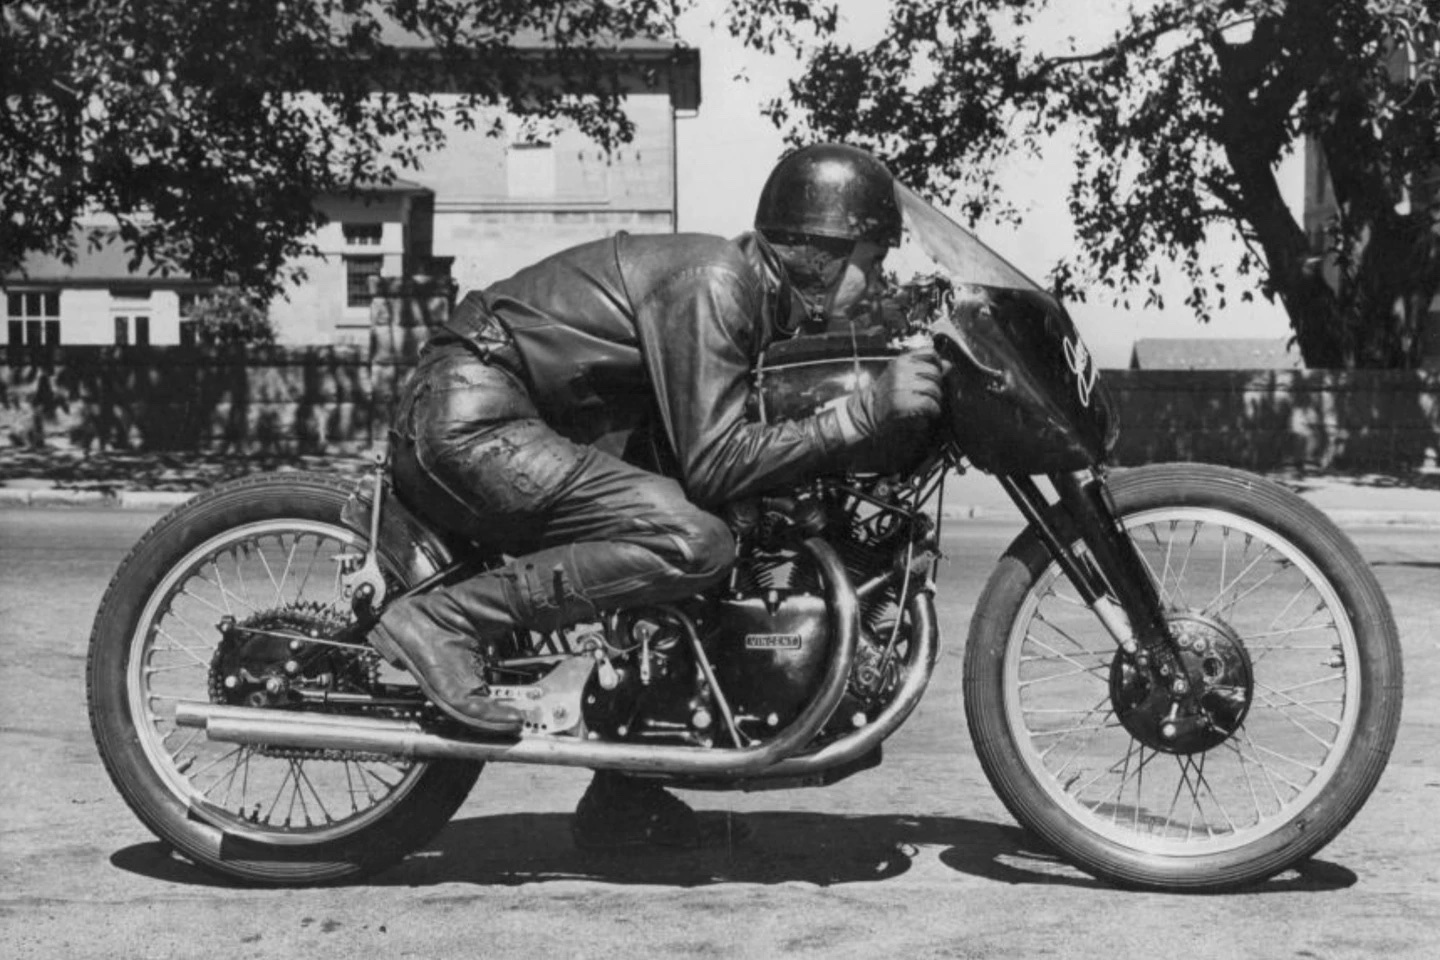 A historical shot of a 1951 Vincent Black Lightning motorcycle in Australia